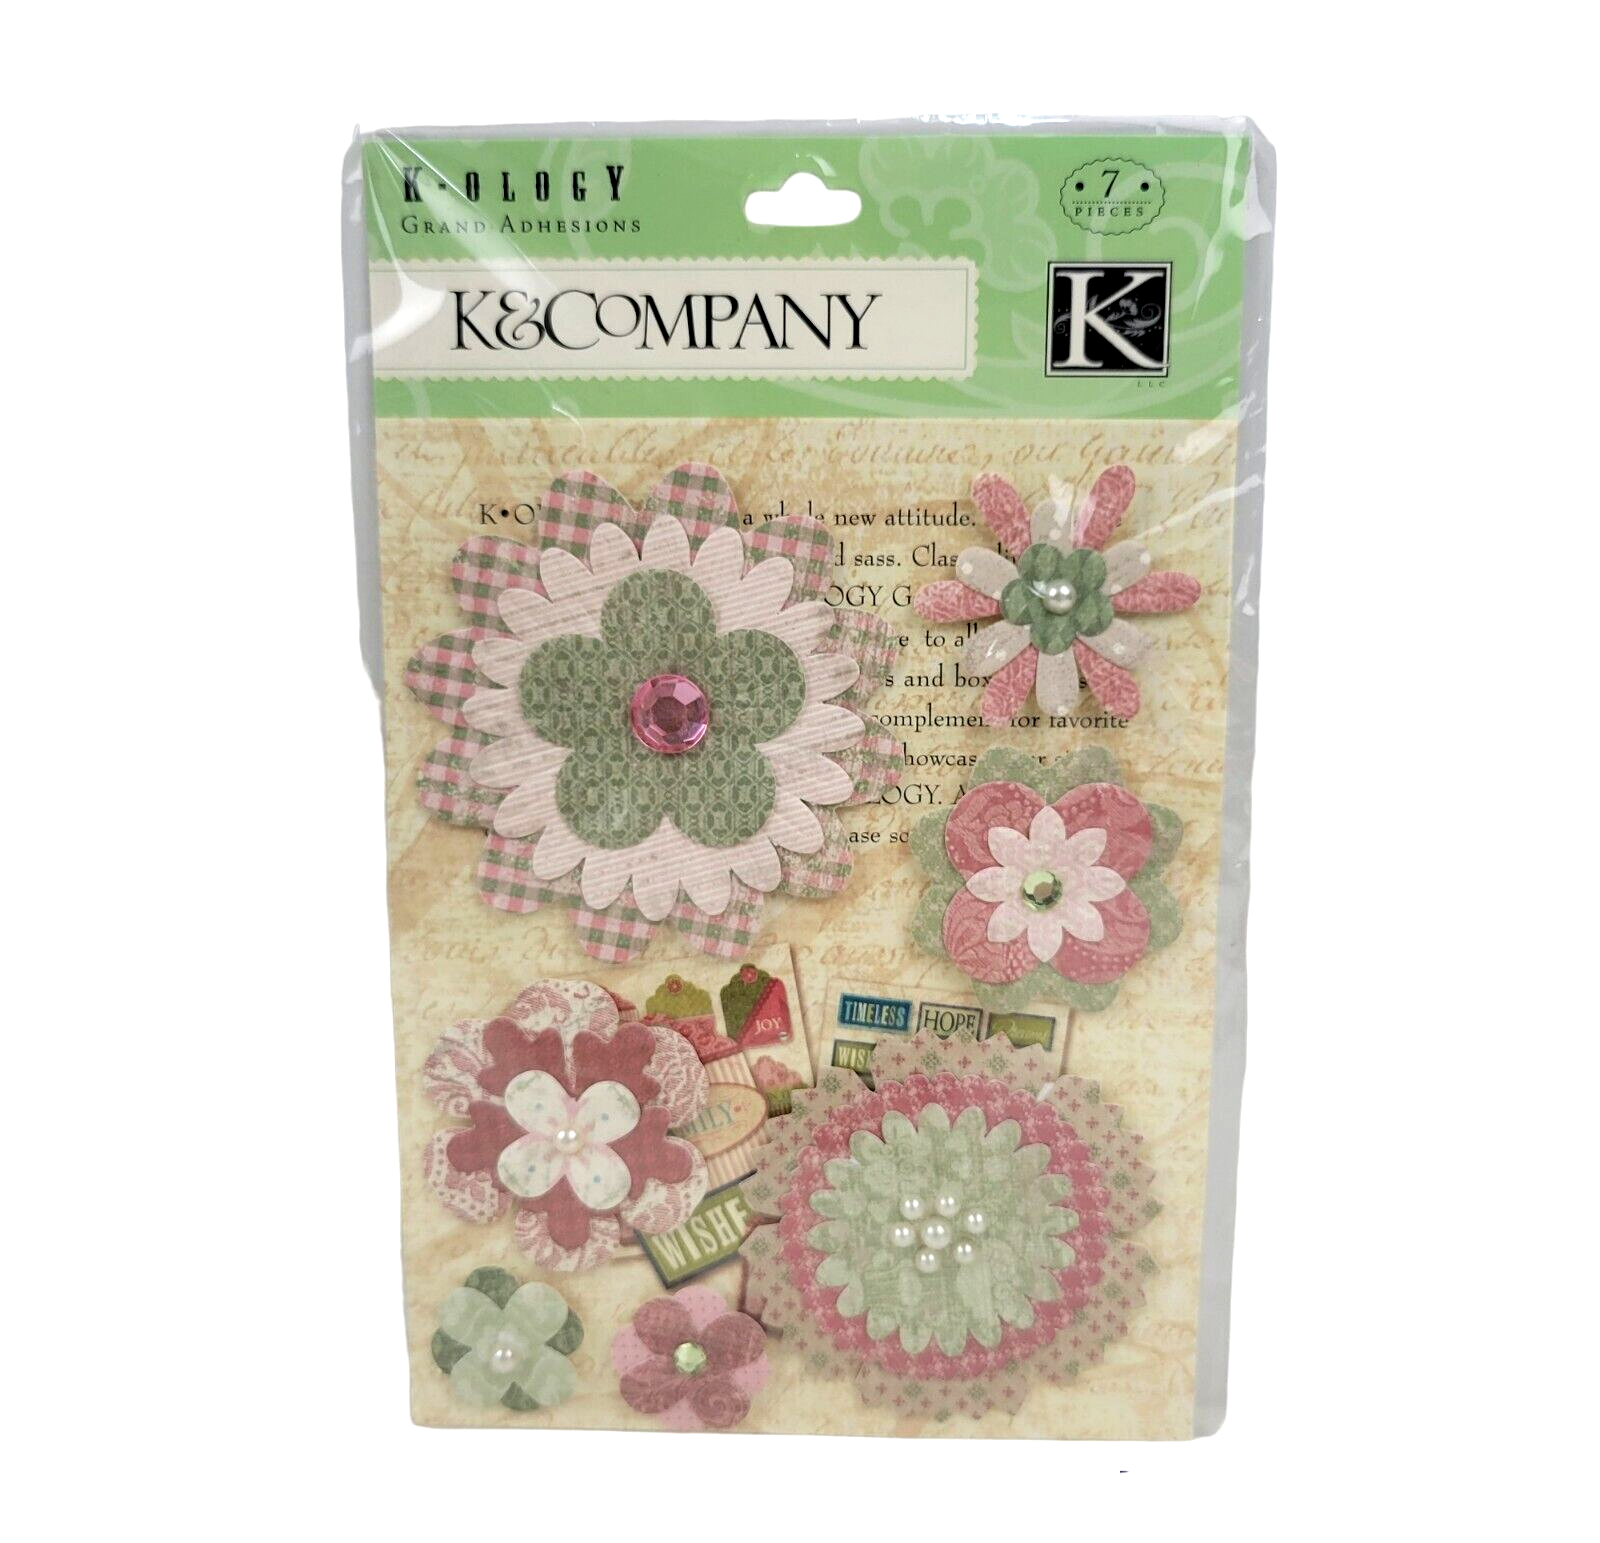 K & Company K-ology Grand Adhesions Hannah Paper Flowers Gems 7 Pcs 554947 NEW - $6.56